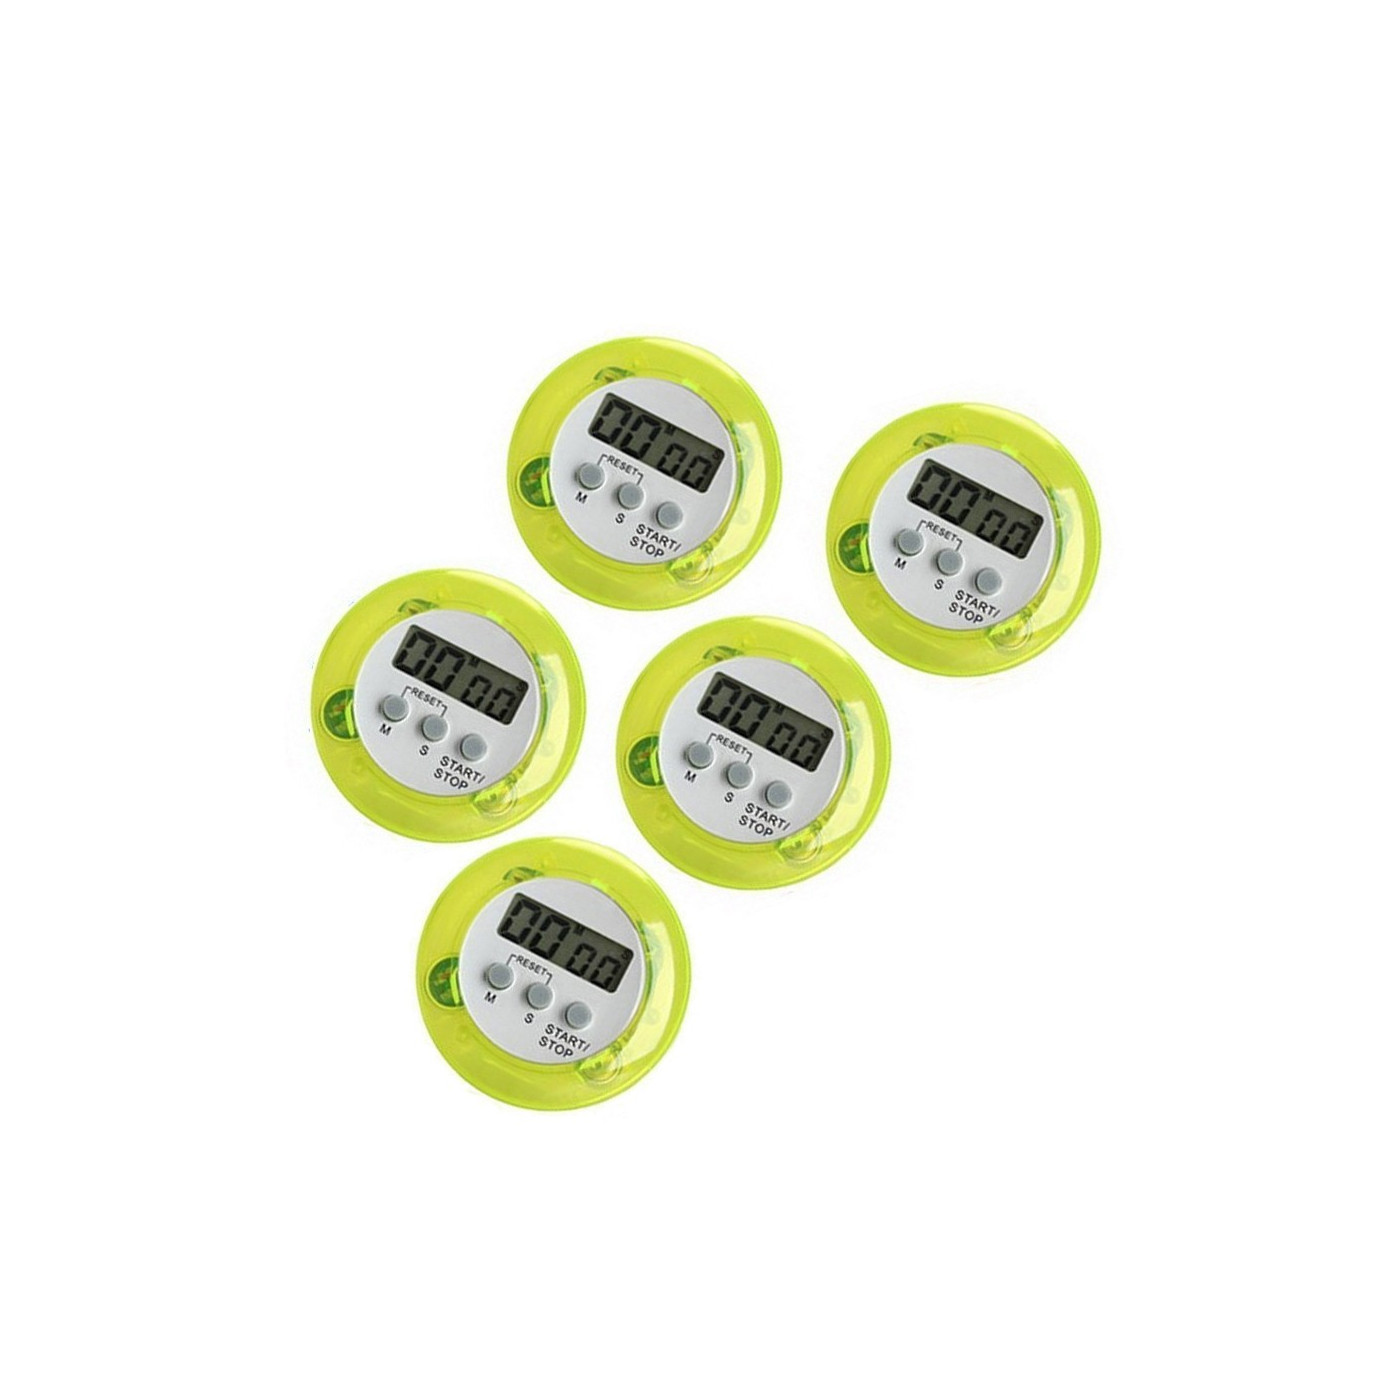 Set of 5 digital kitchen timers, alarm clocks, green